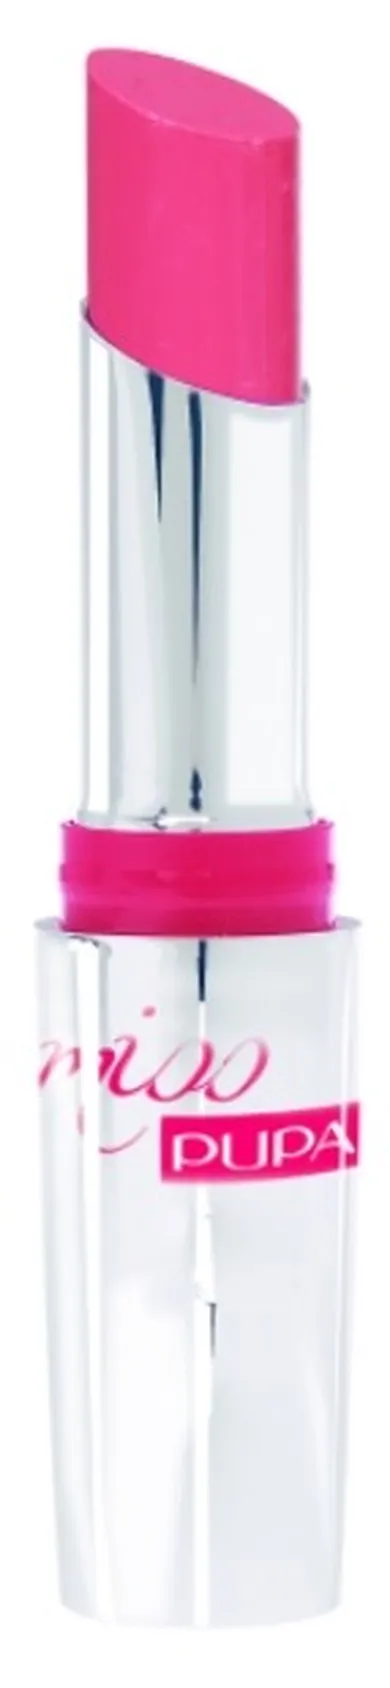 Pupa, Miss Pupa Ultra Brilliant Lipstick, pomadka do ust 102, 2,4 ml